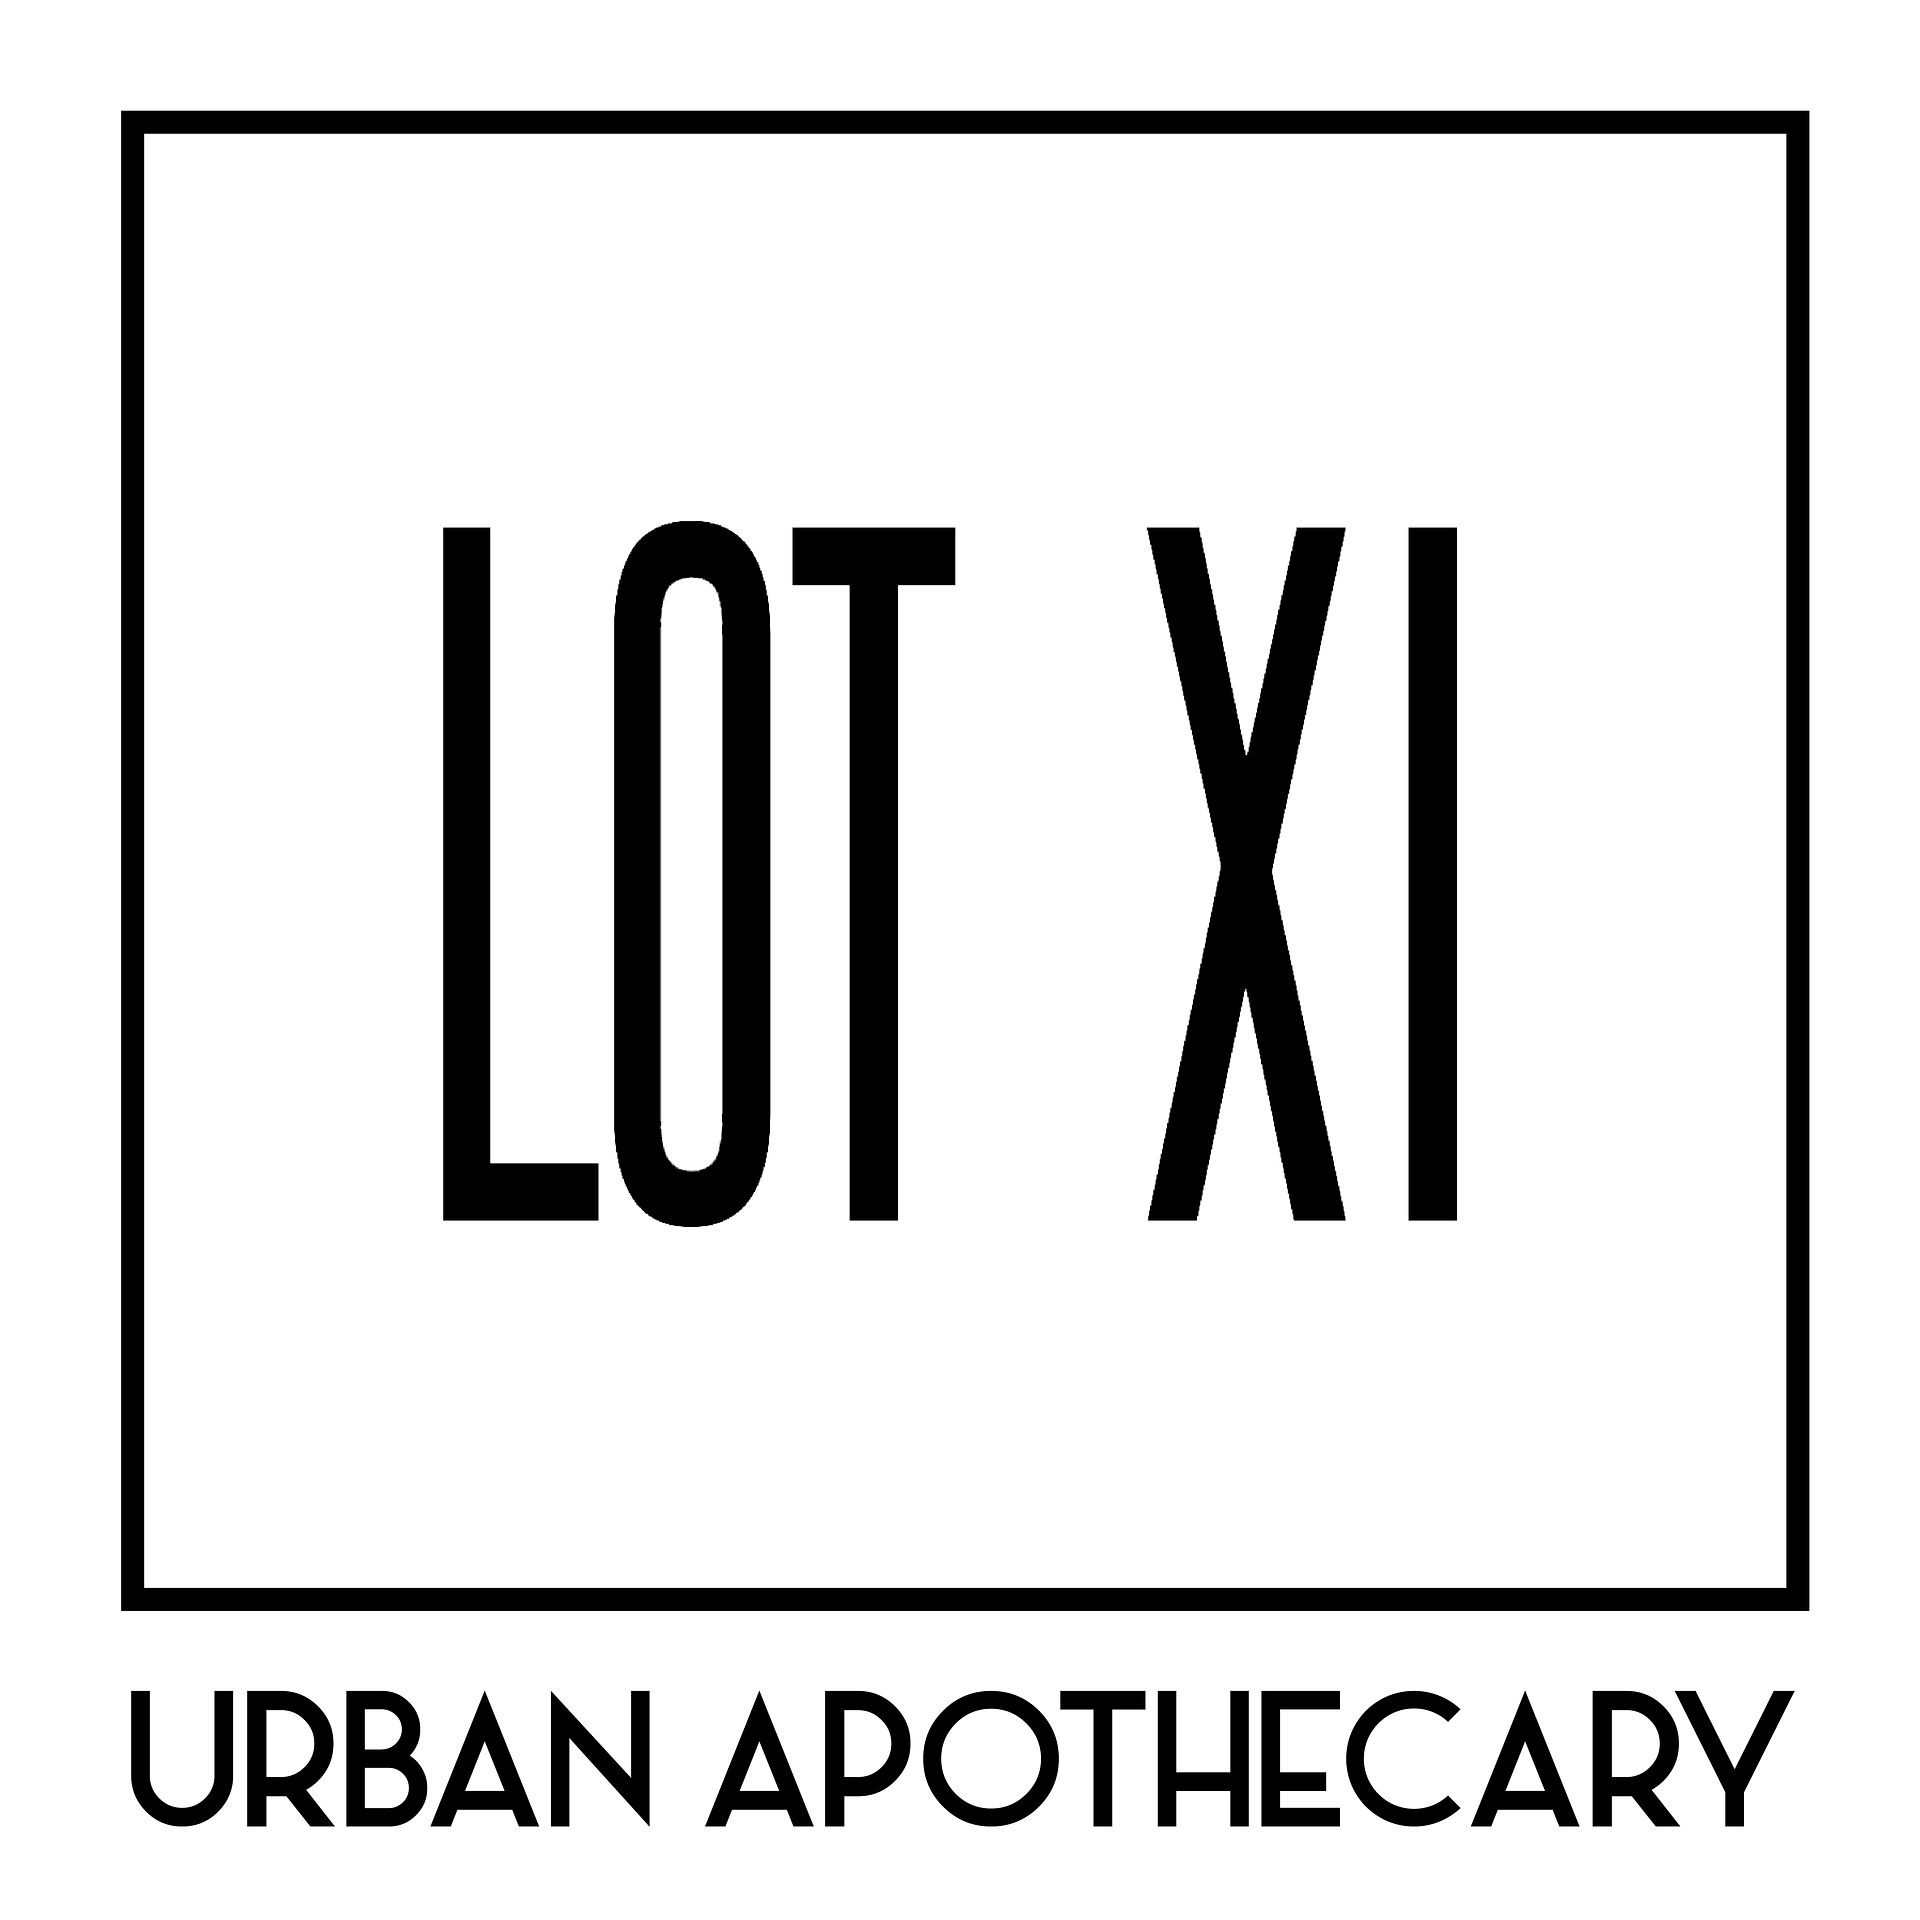 Imani-Gardens-Logo